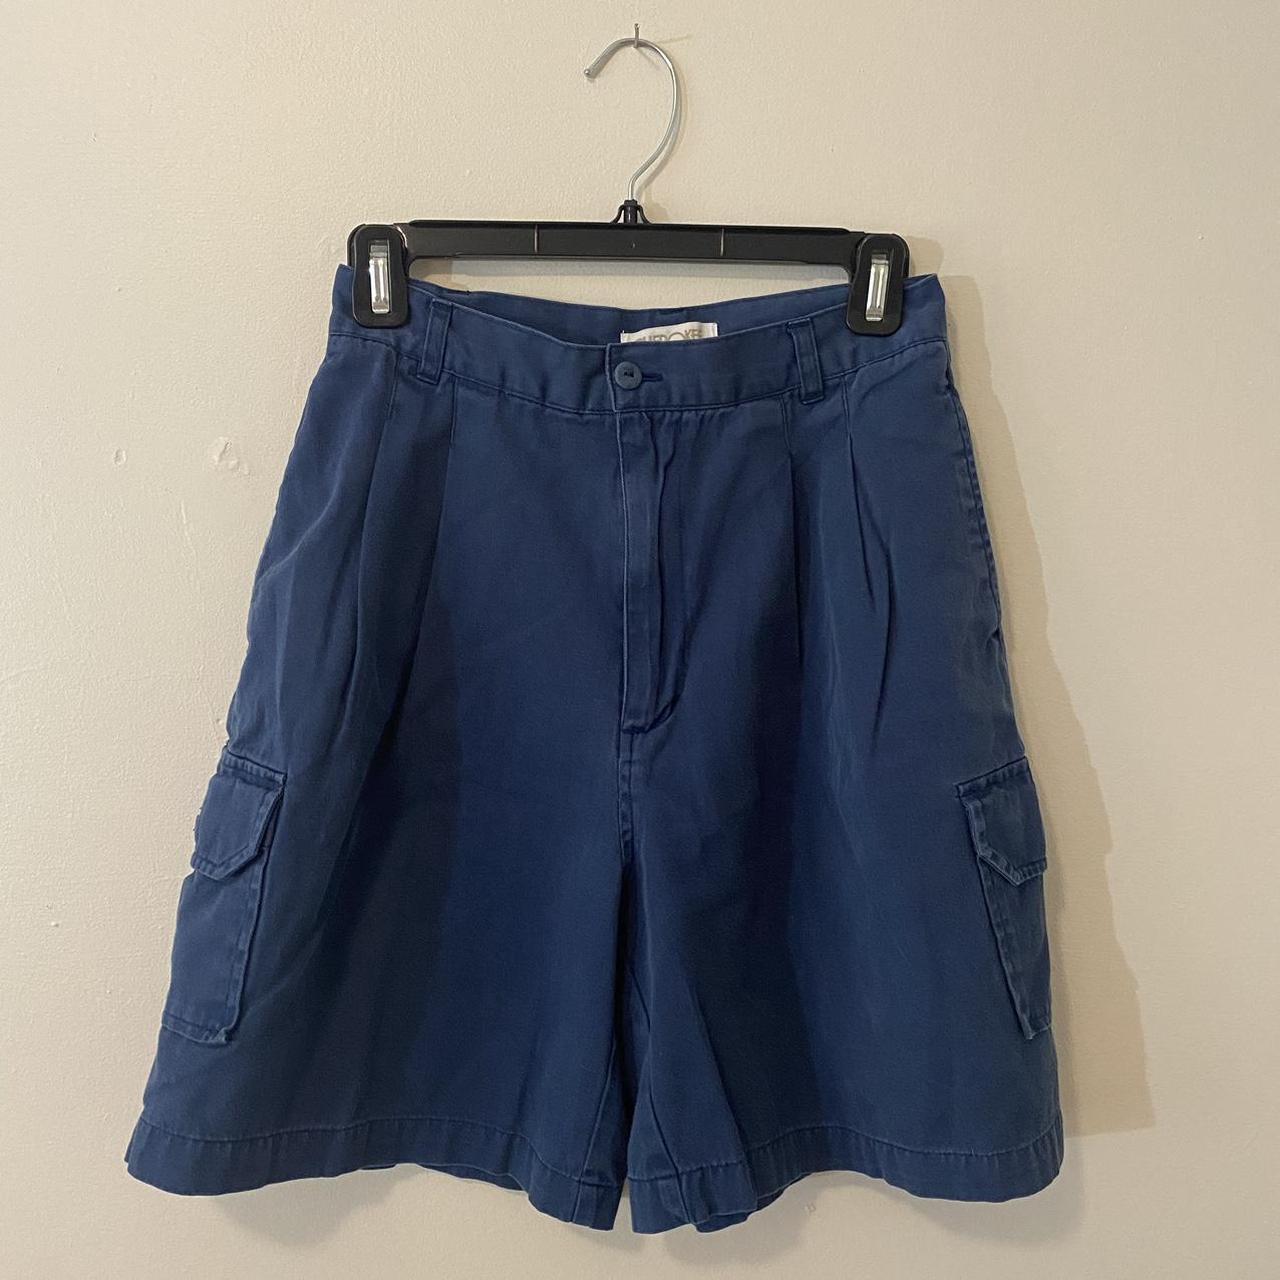 Cherokee Women's Blue and Navy Shorts (3)